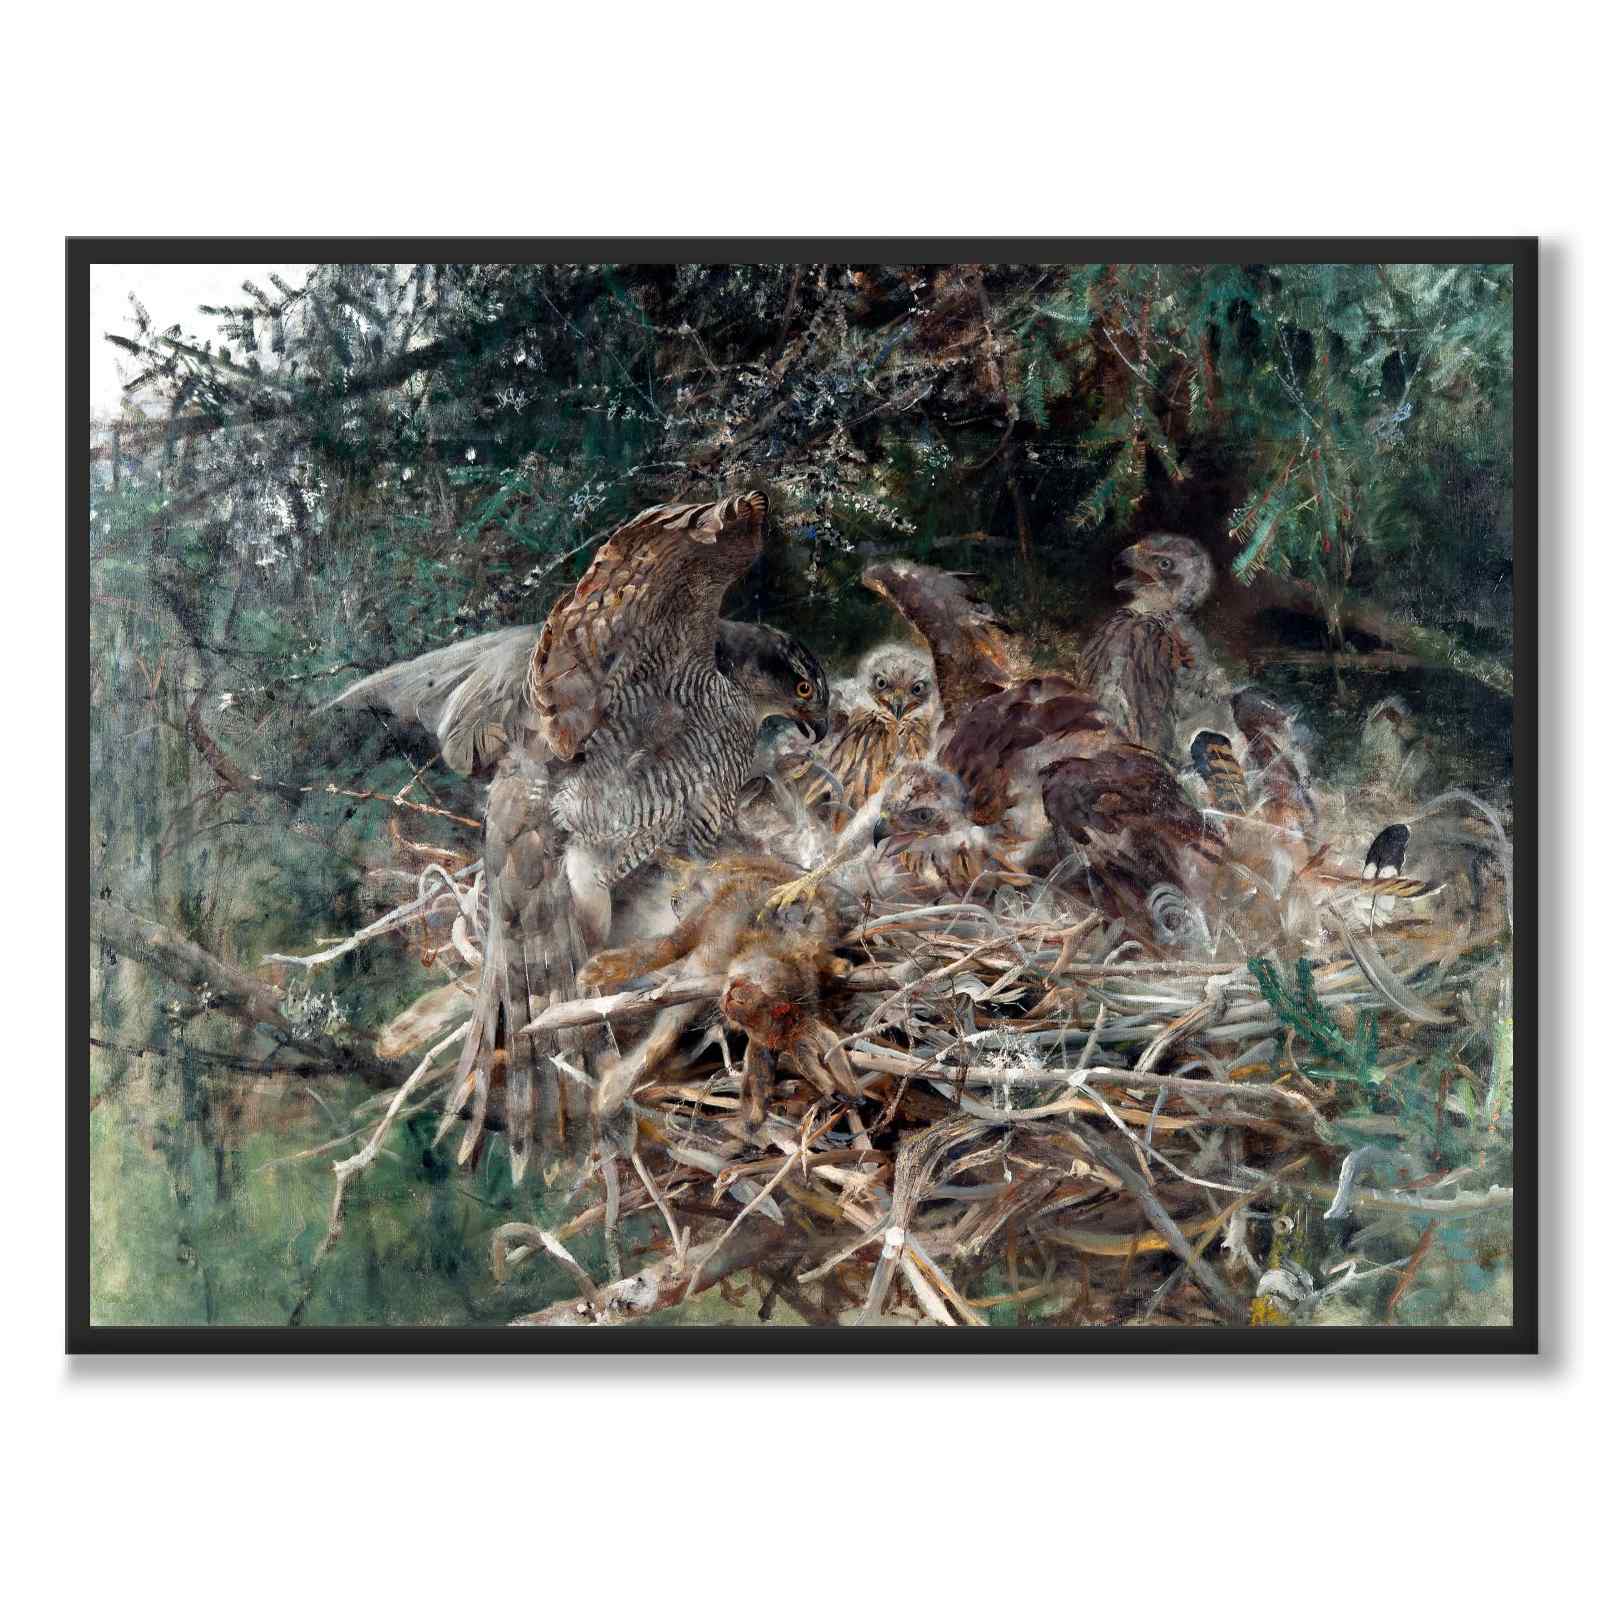 Hawk's nest - Plakat 